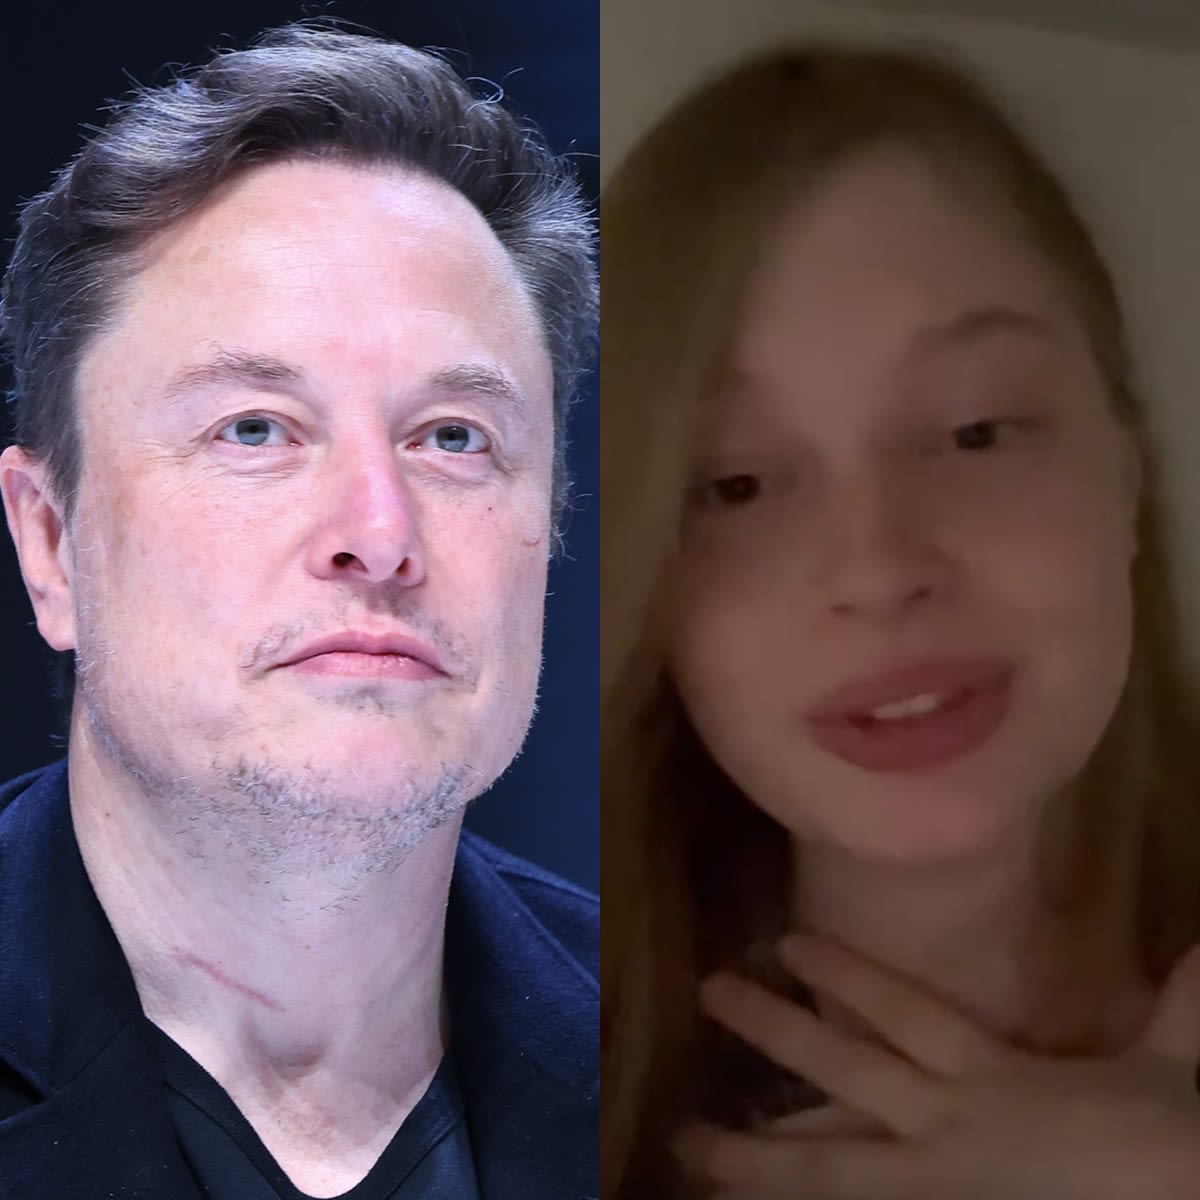 Elon Musk’s Daughter Vivian Responds to His Transgender Views